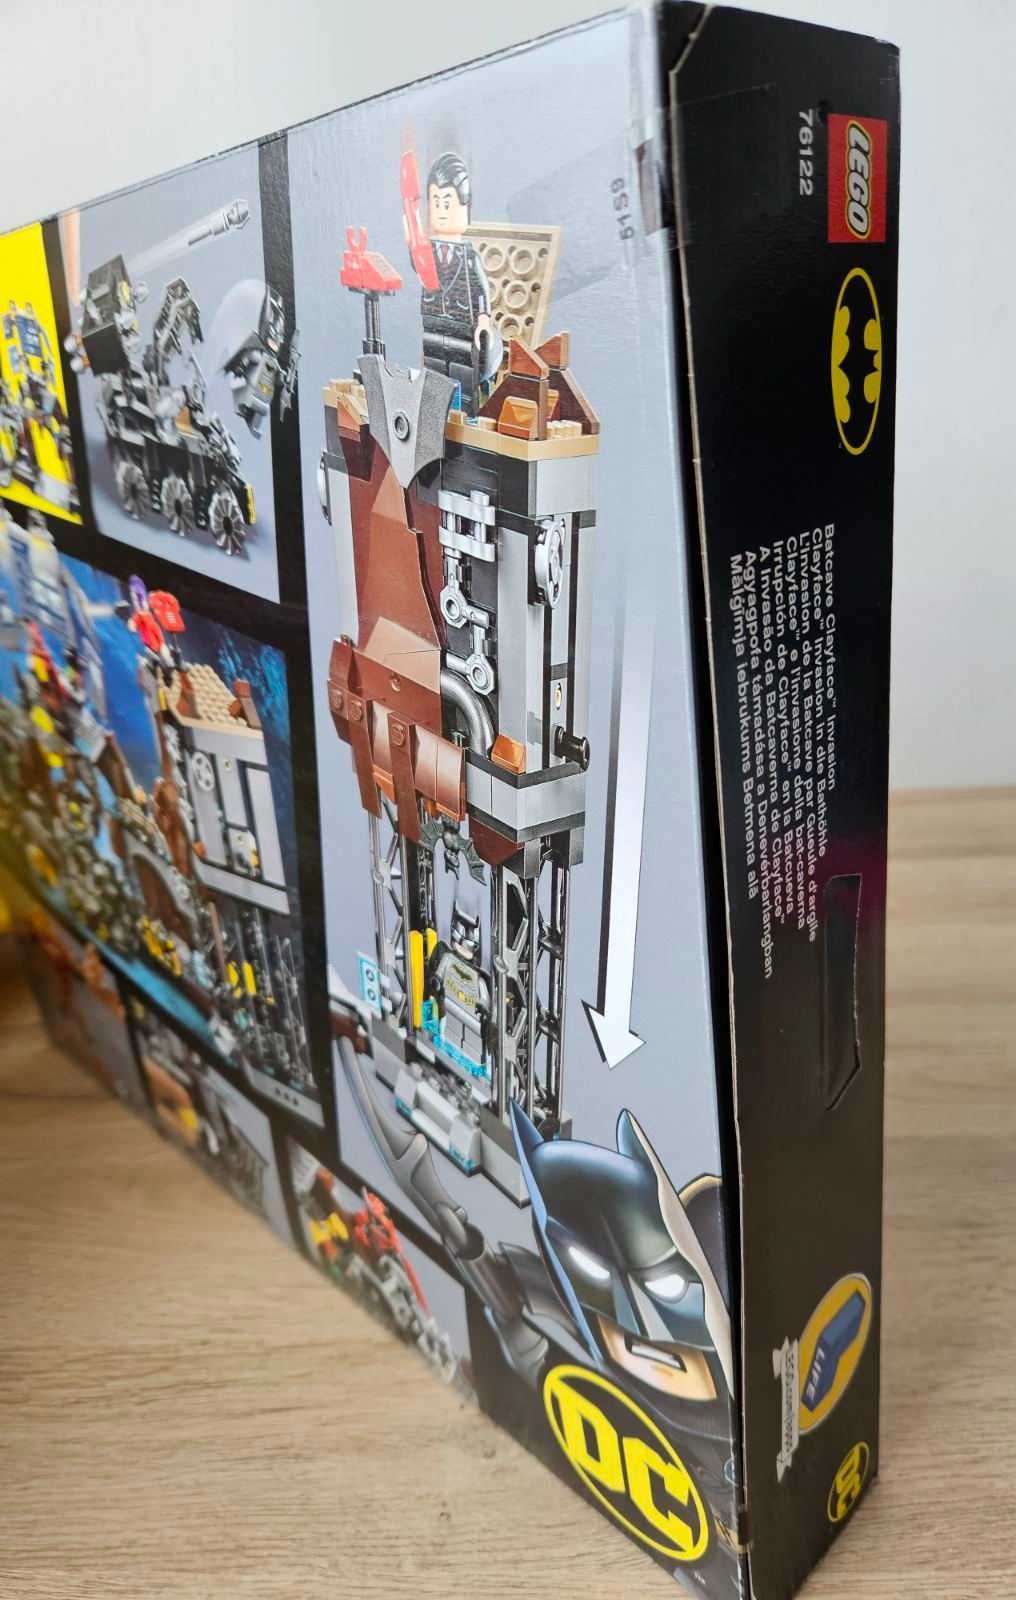 Lego DC Batman - сет 76122